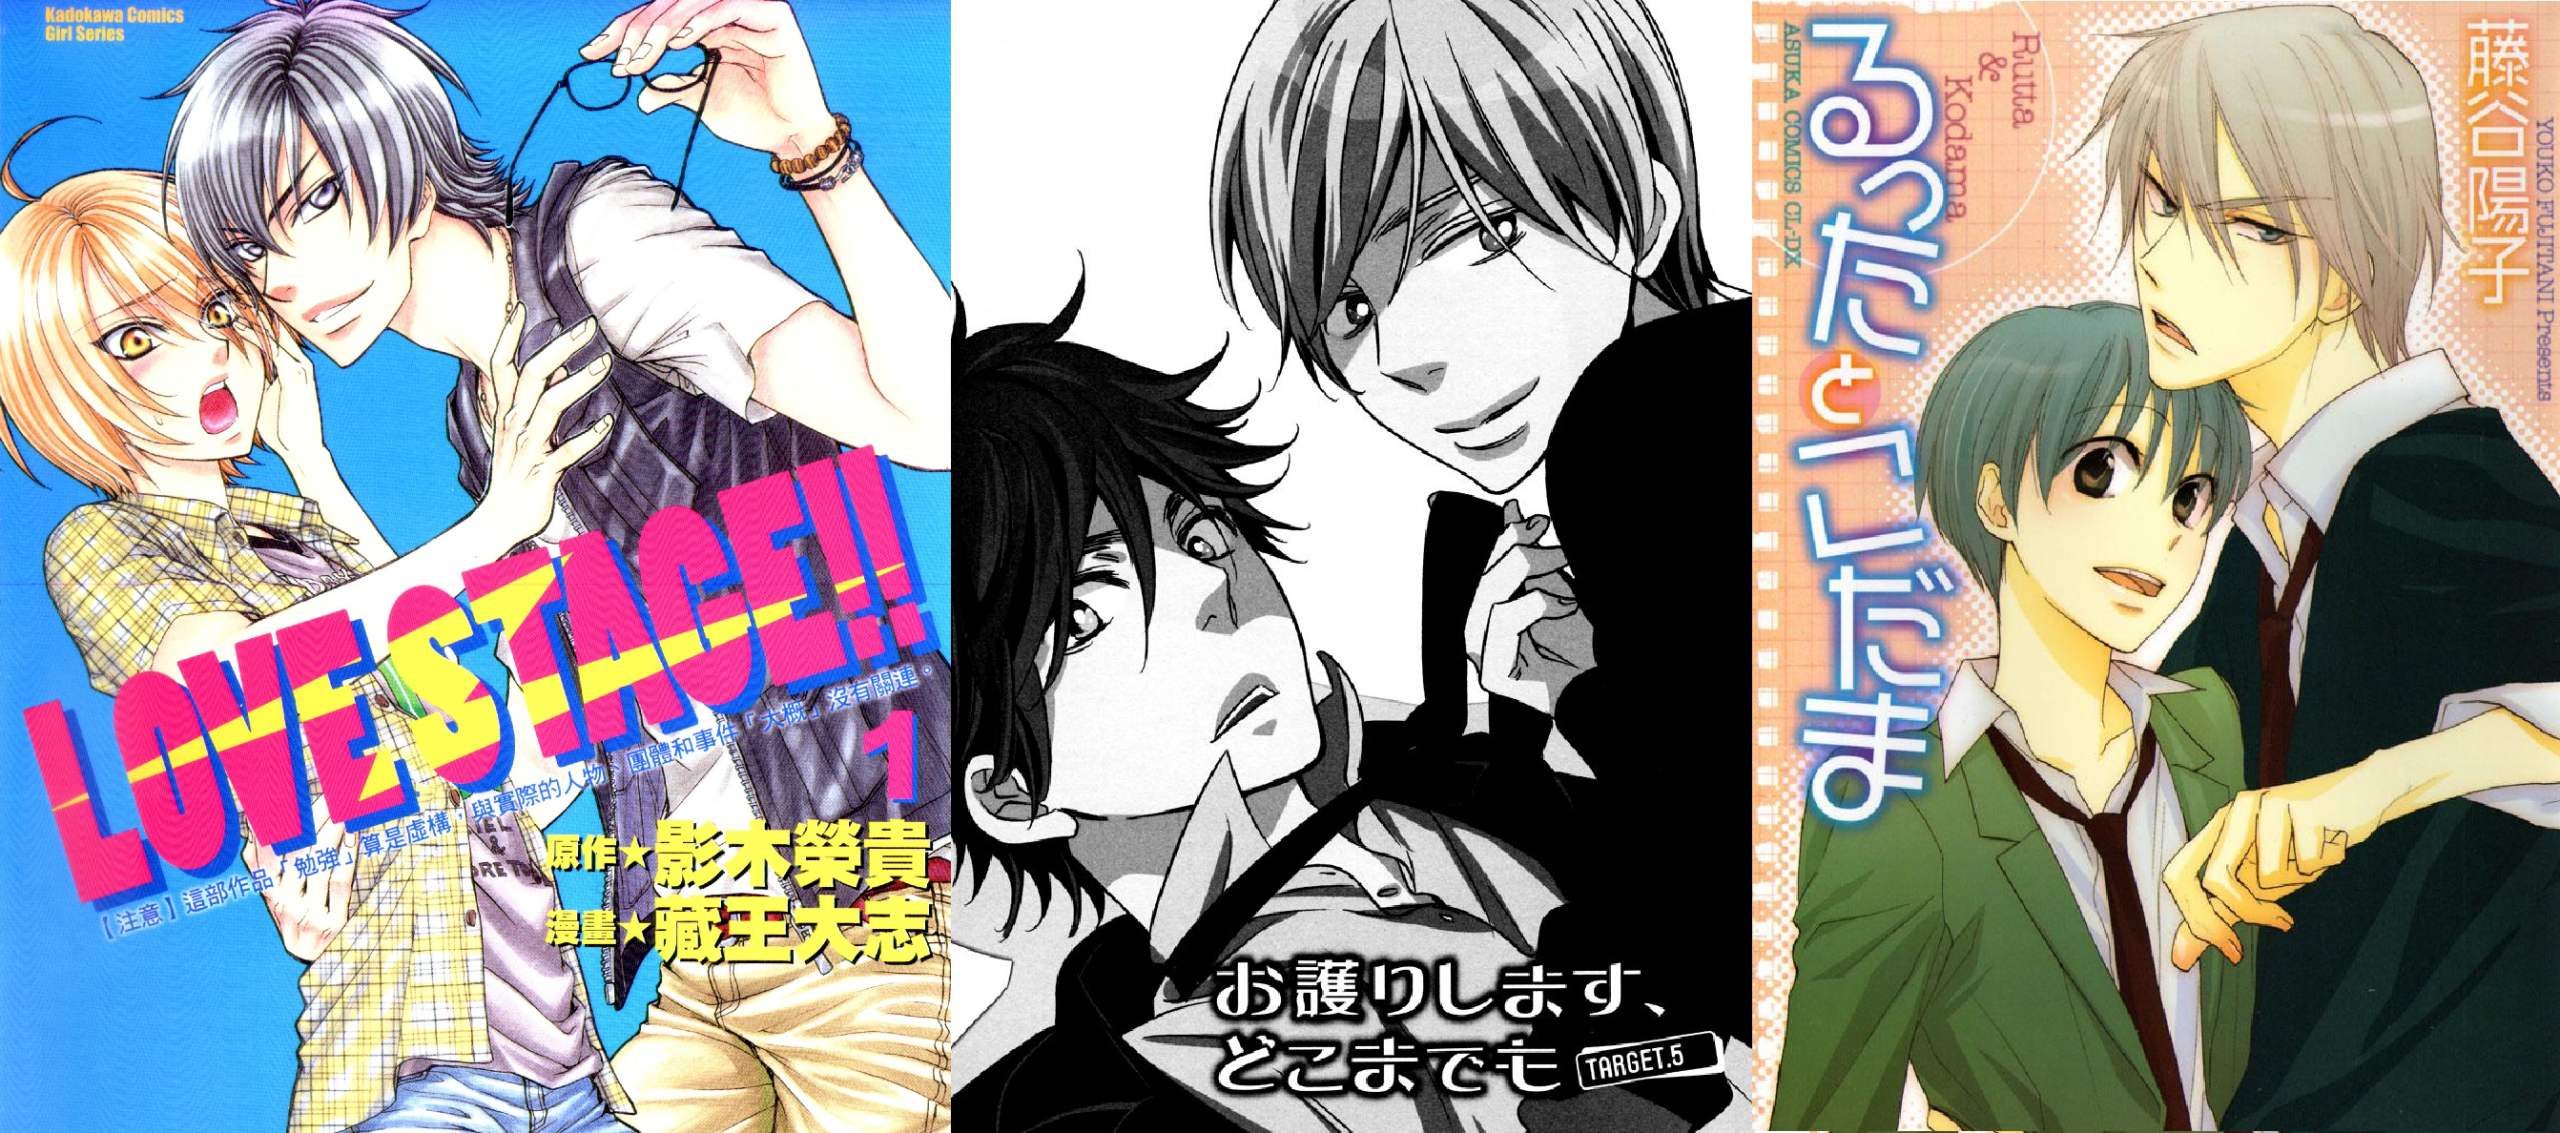 Anime List 2014 Romance